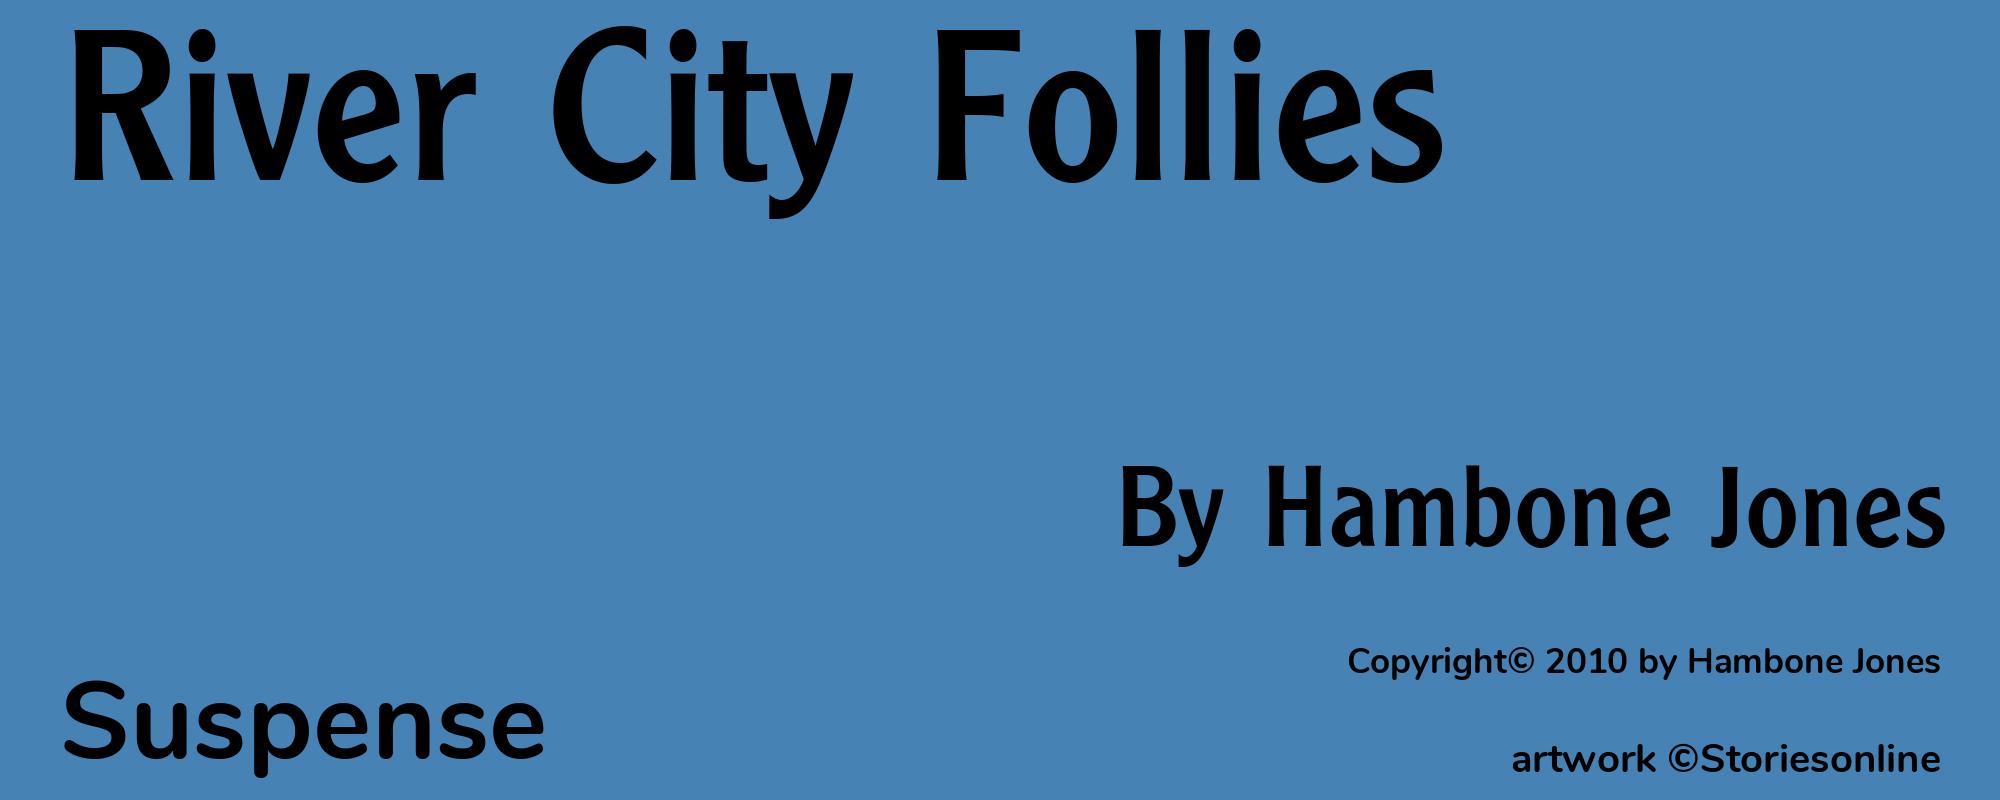 River City Follies - Cover